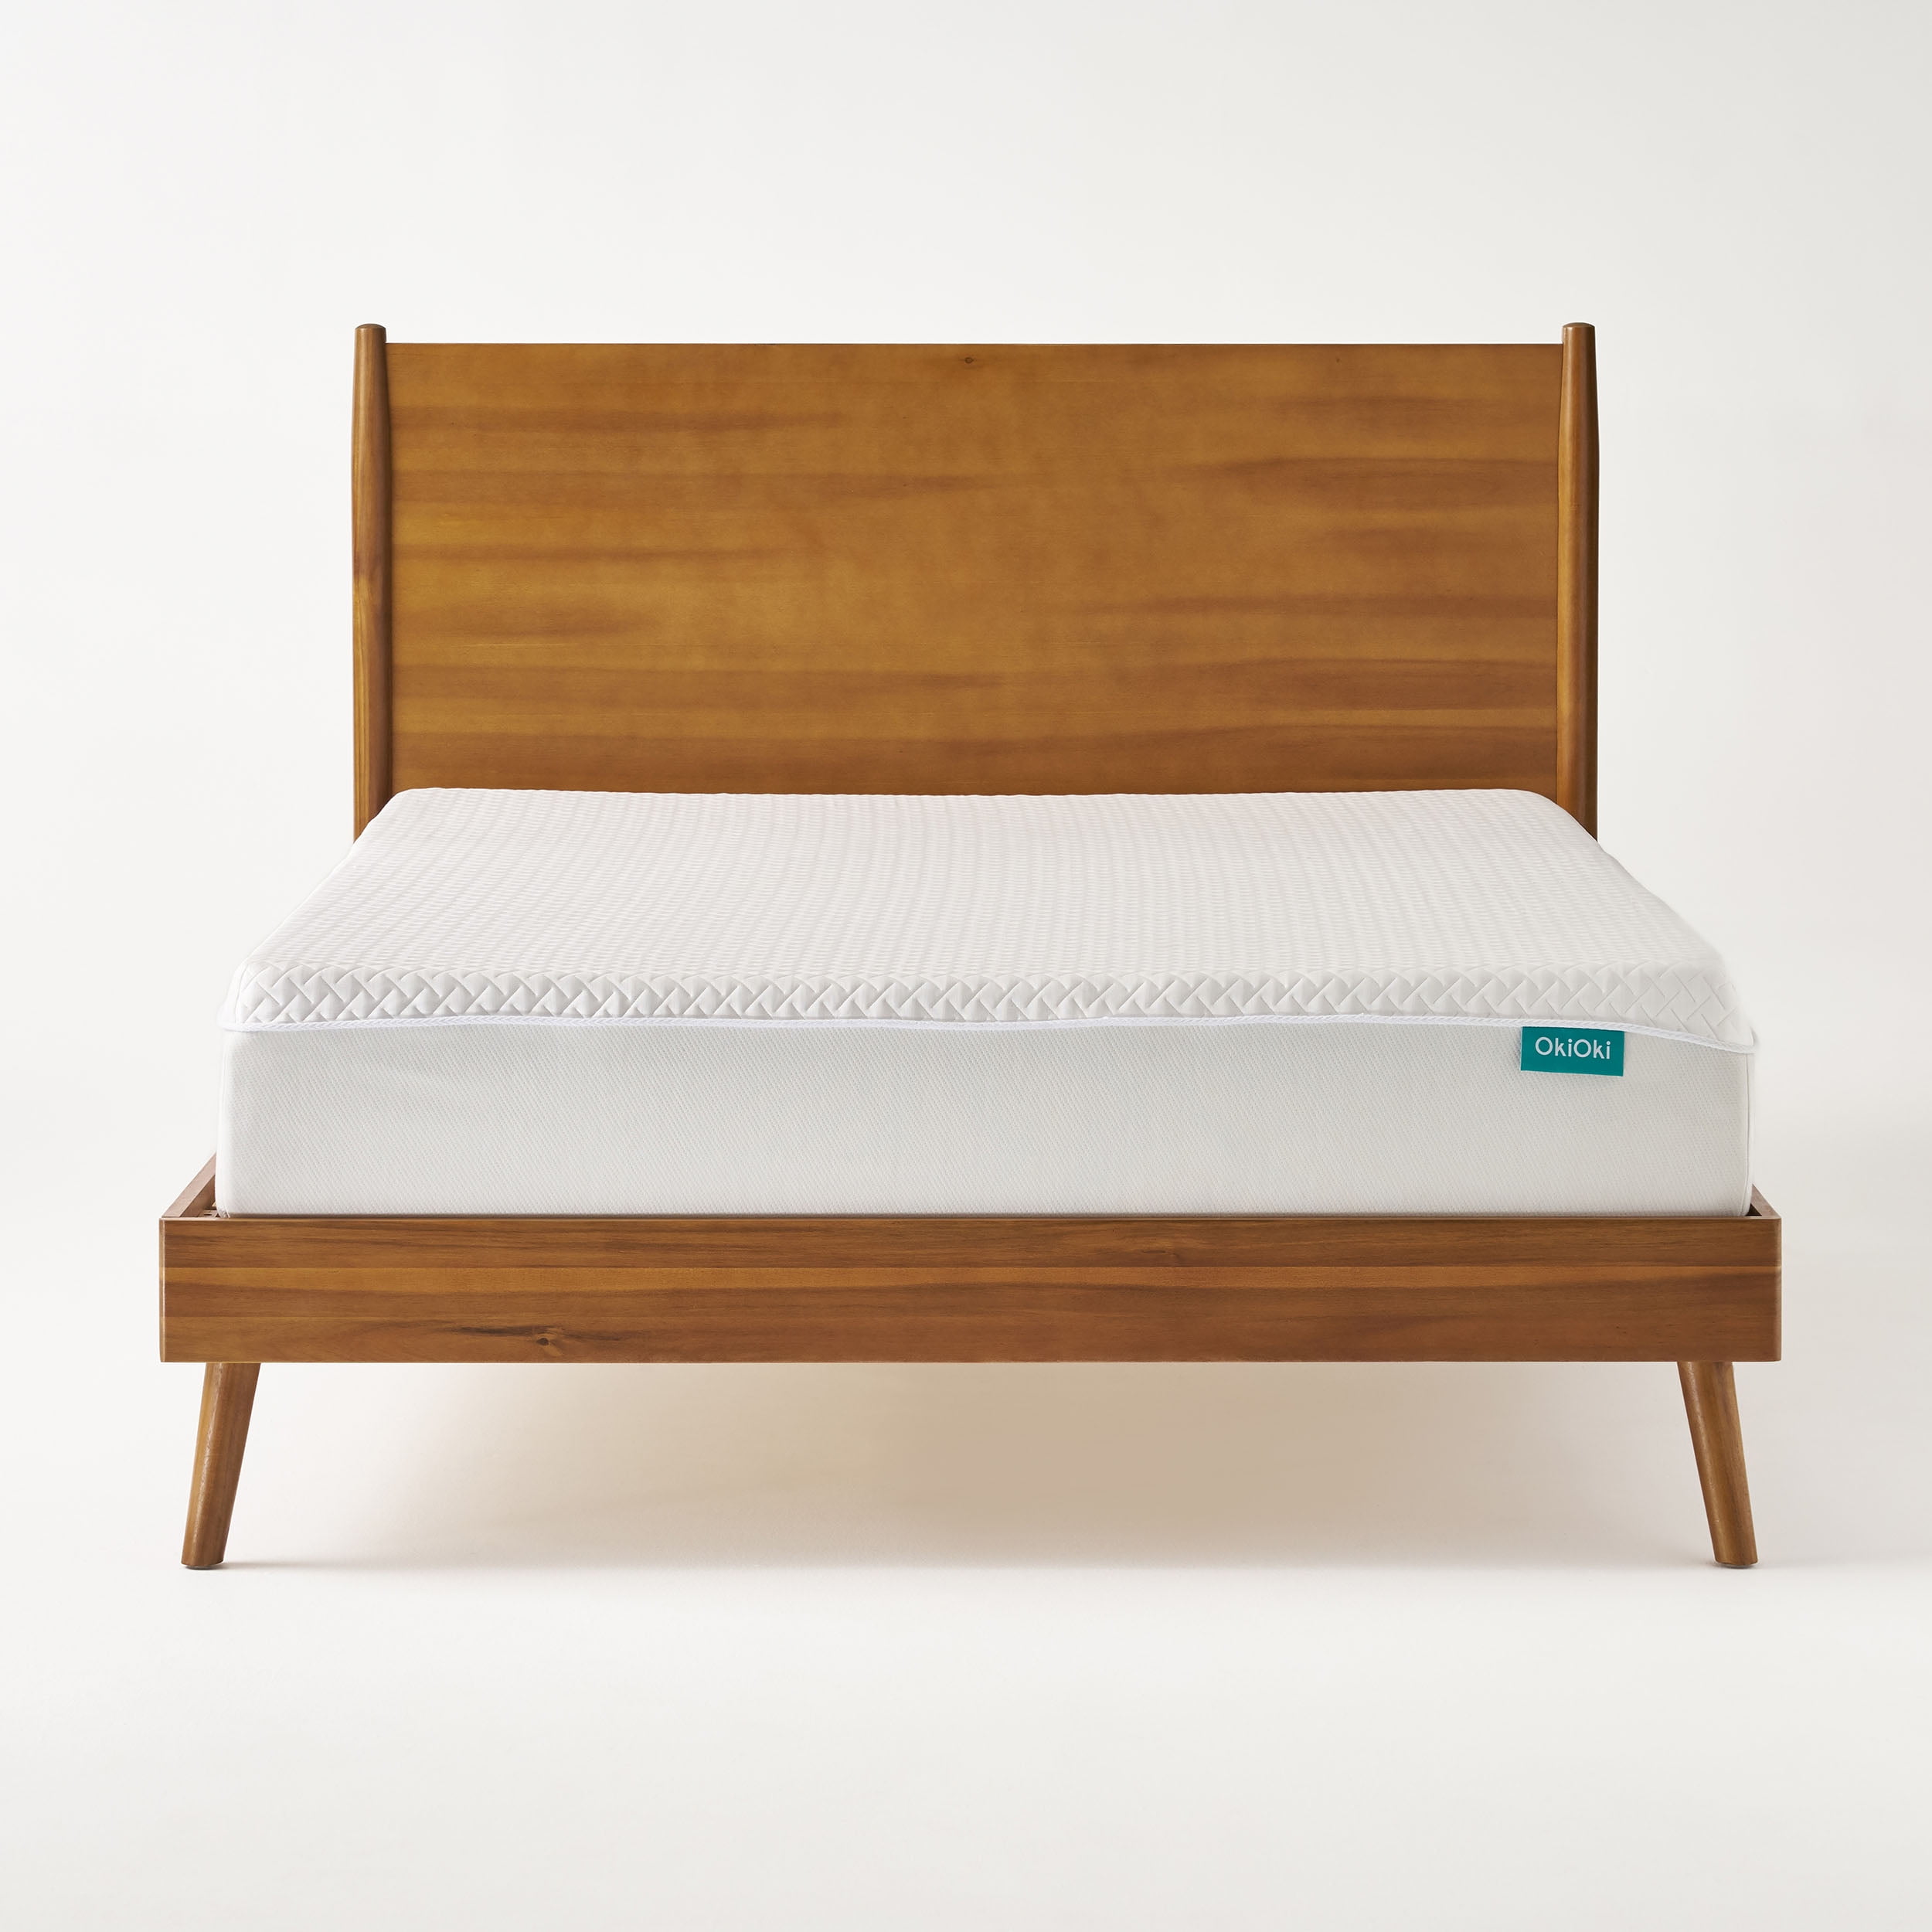 Okisoft Mattresid Century Bed, Twin Xl Cherry Bed Frame